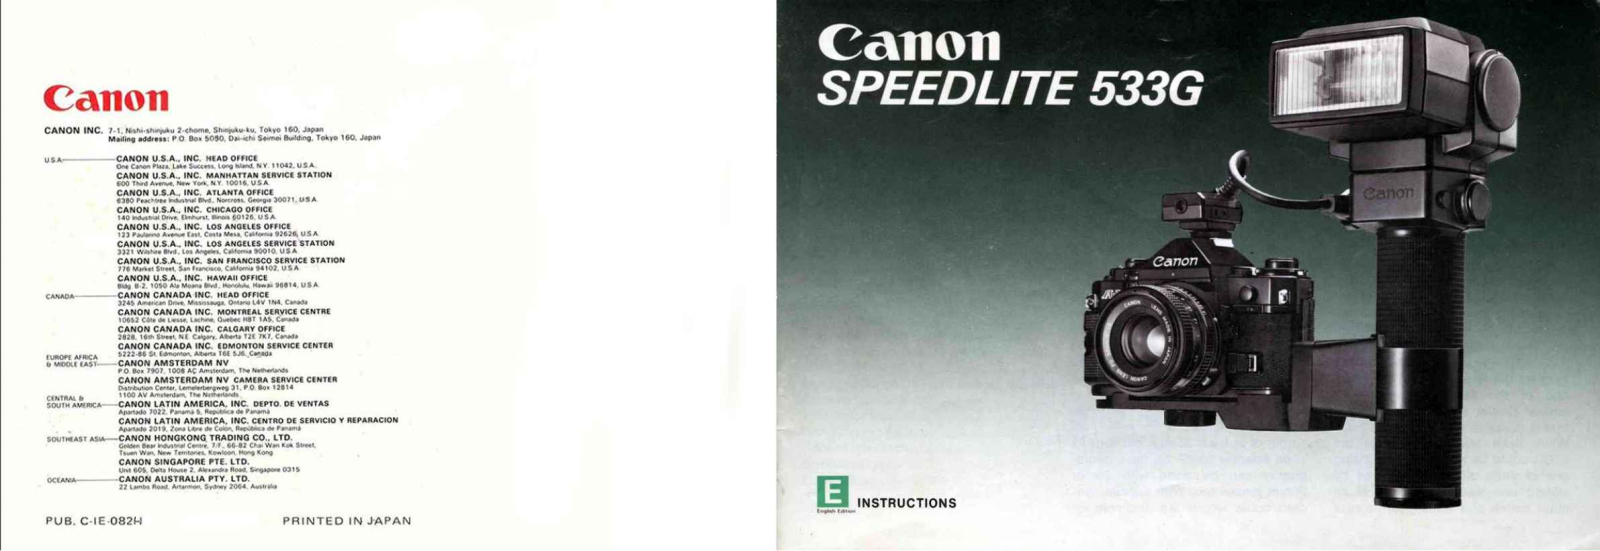 Canon Speedlite 533G Instruction Manual